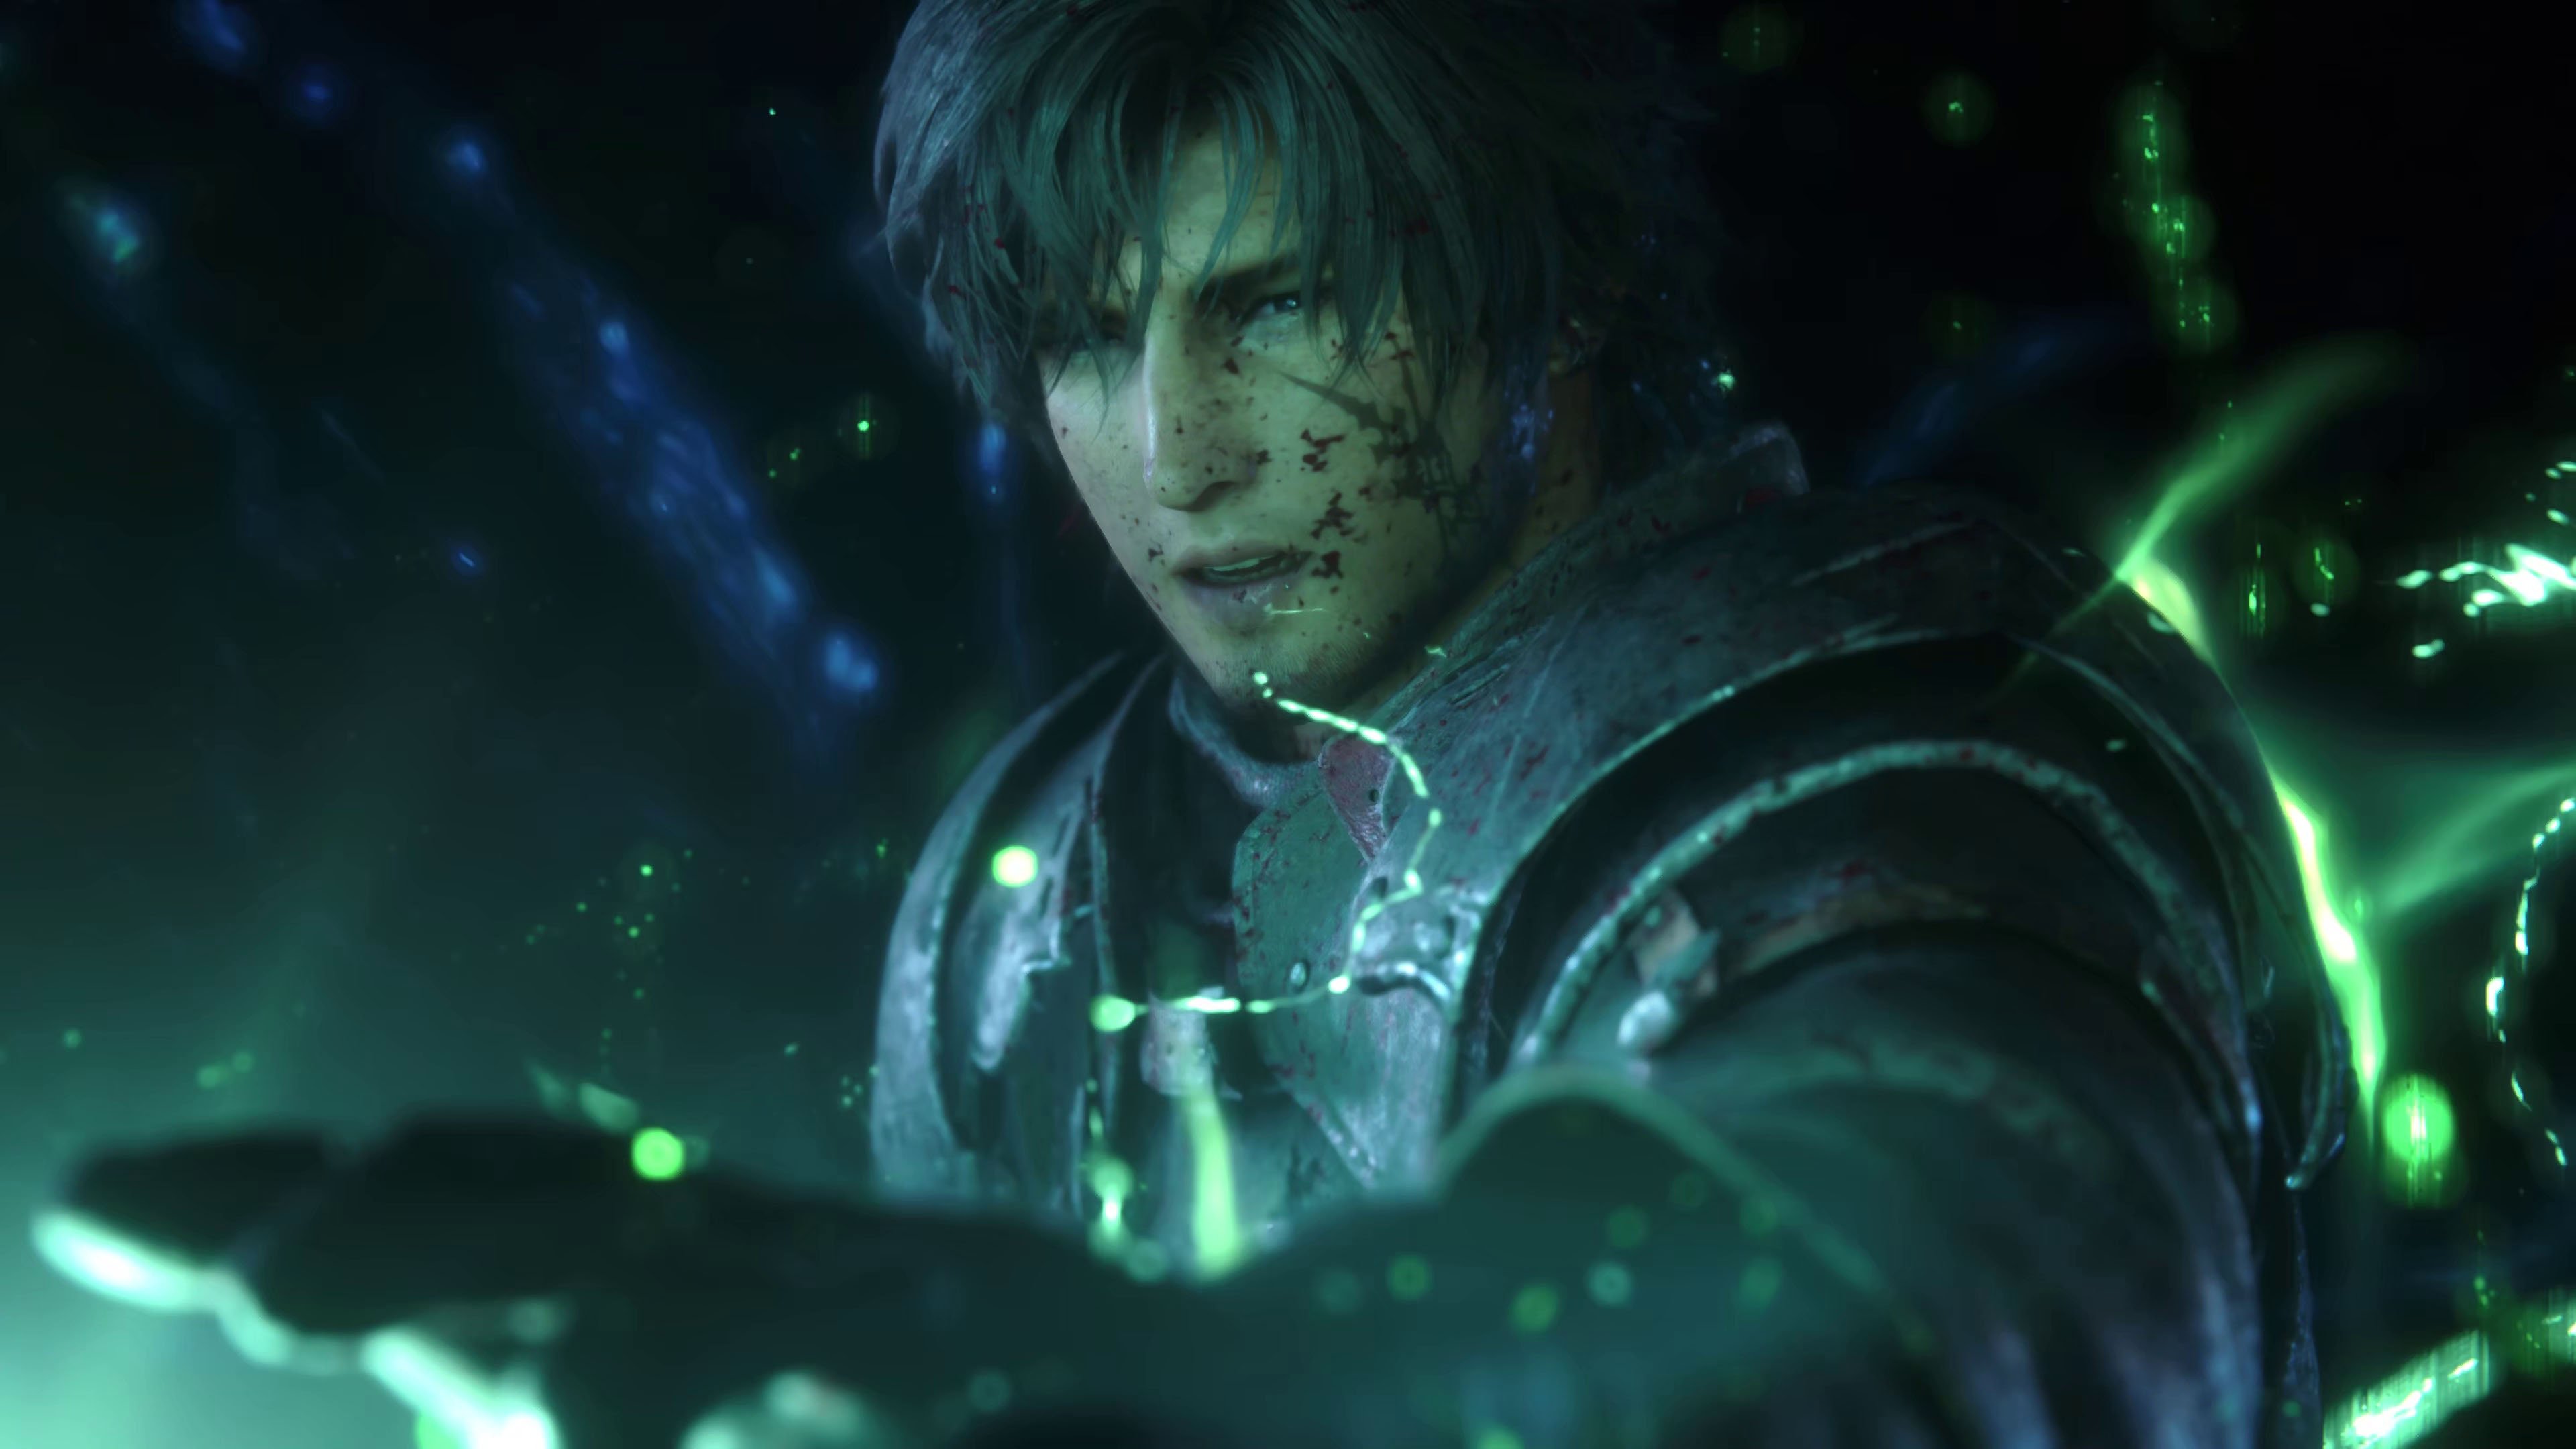 Final Fantasy XVI launches June 22, 2023 - Gematsu